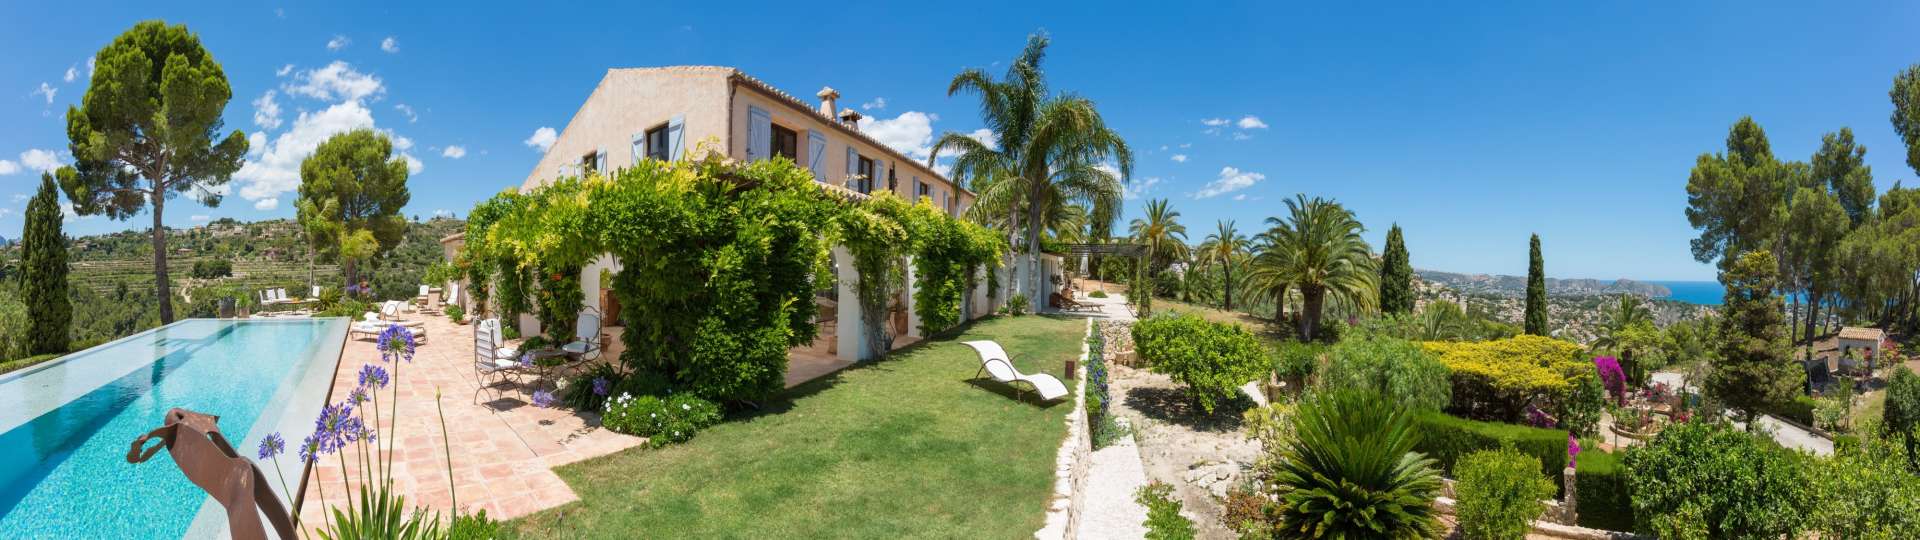 Finca Mediterranea La Hacienda by COSTA HOUSES Luxury Villas S.L Registered Real Estate ®️ Expert Costa Blanca North Spain